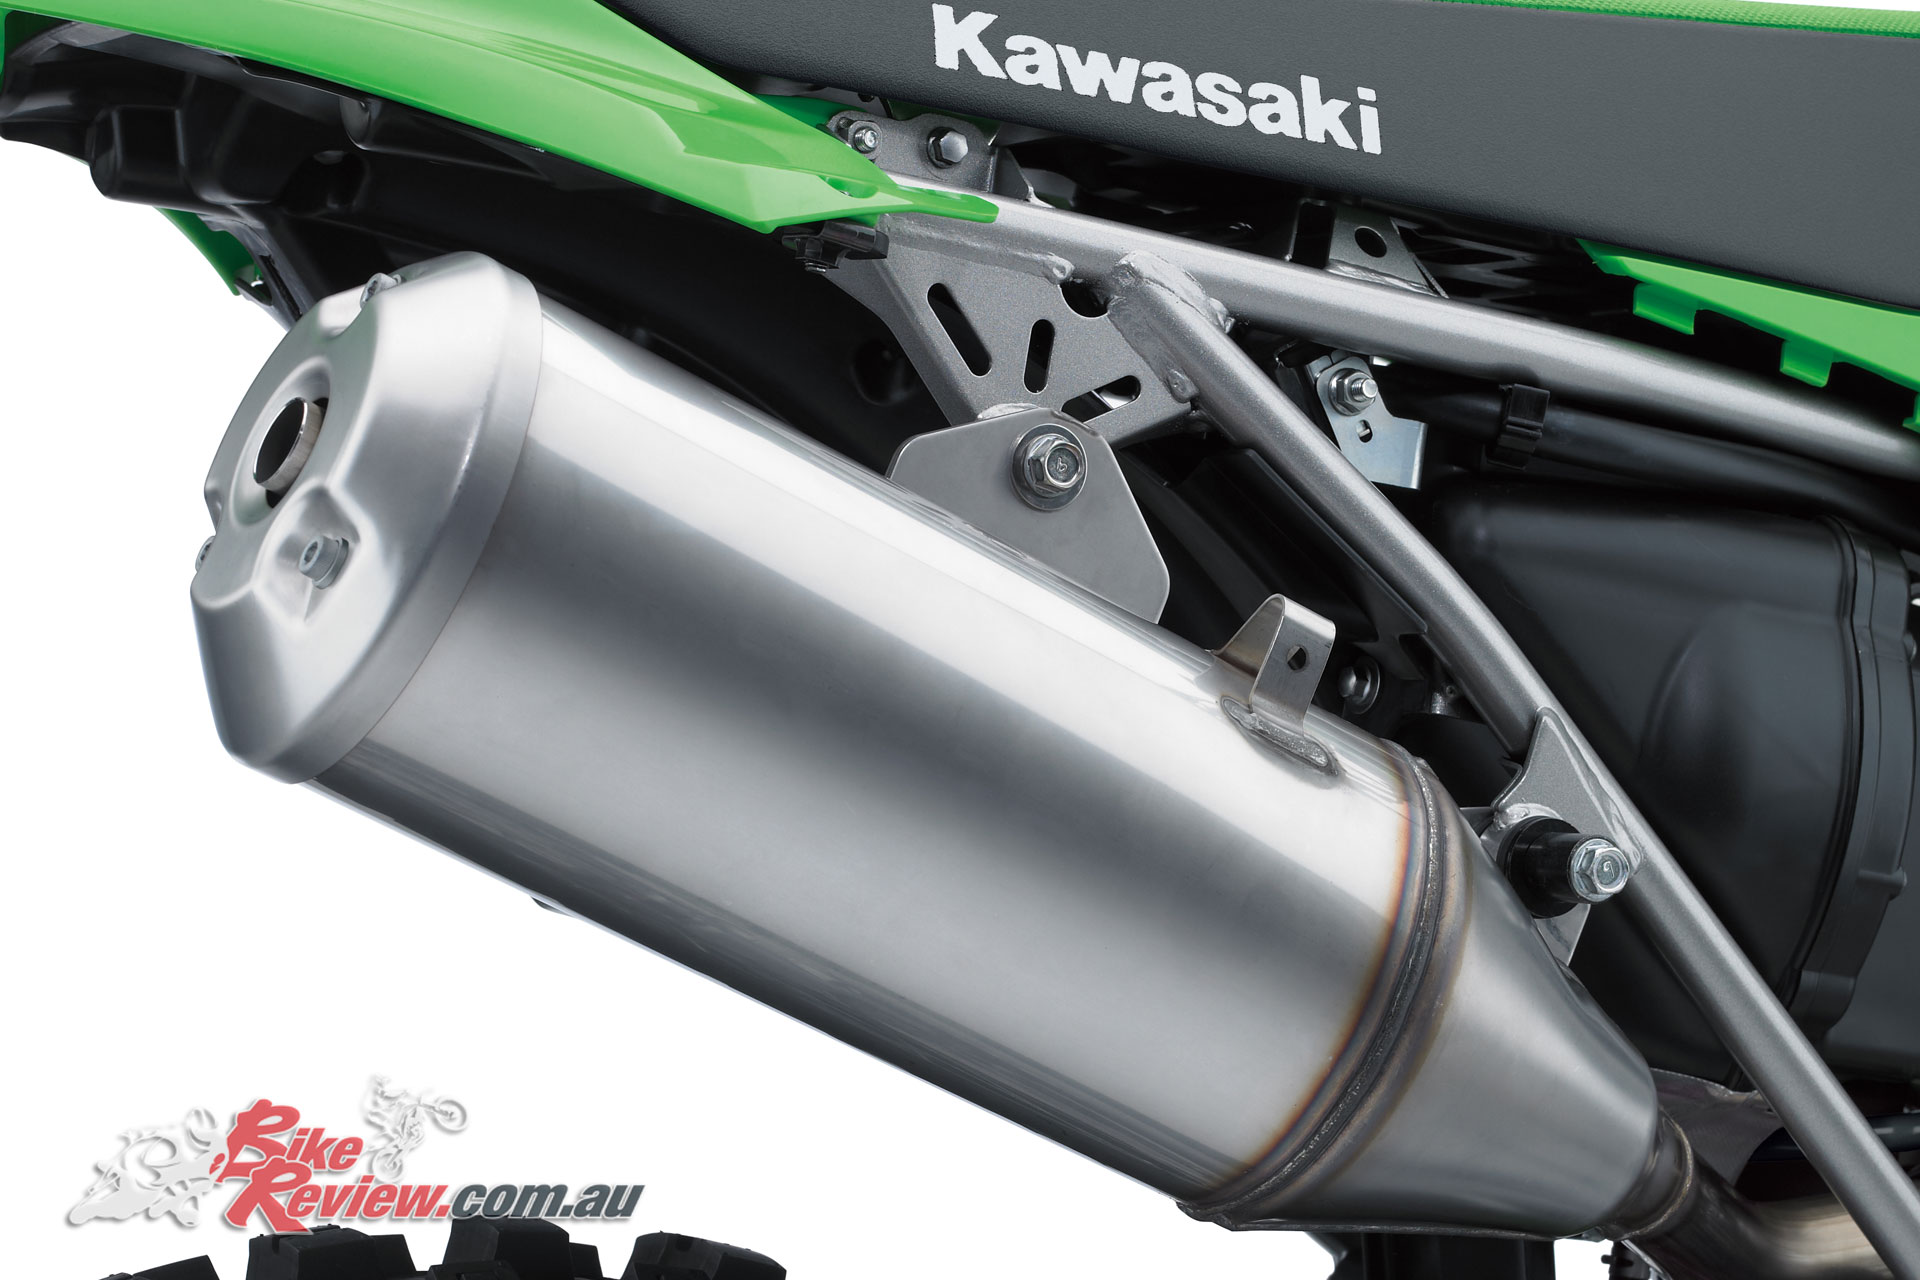 2020 Kawasaki KLX300R - Stainless steel exhaust